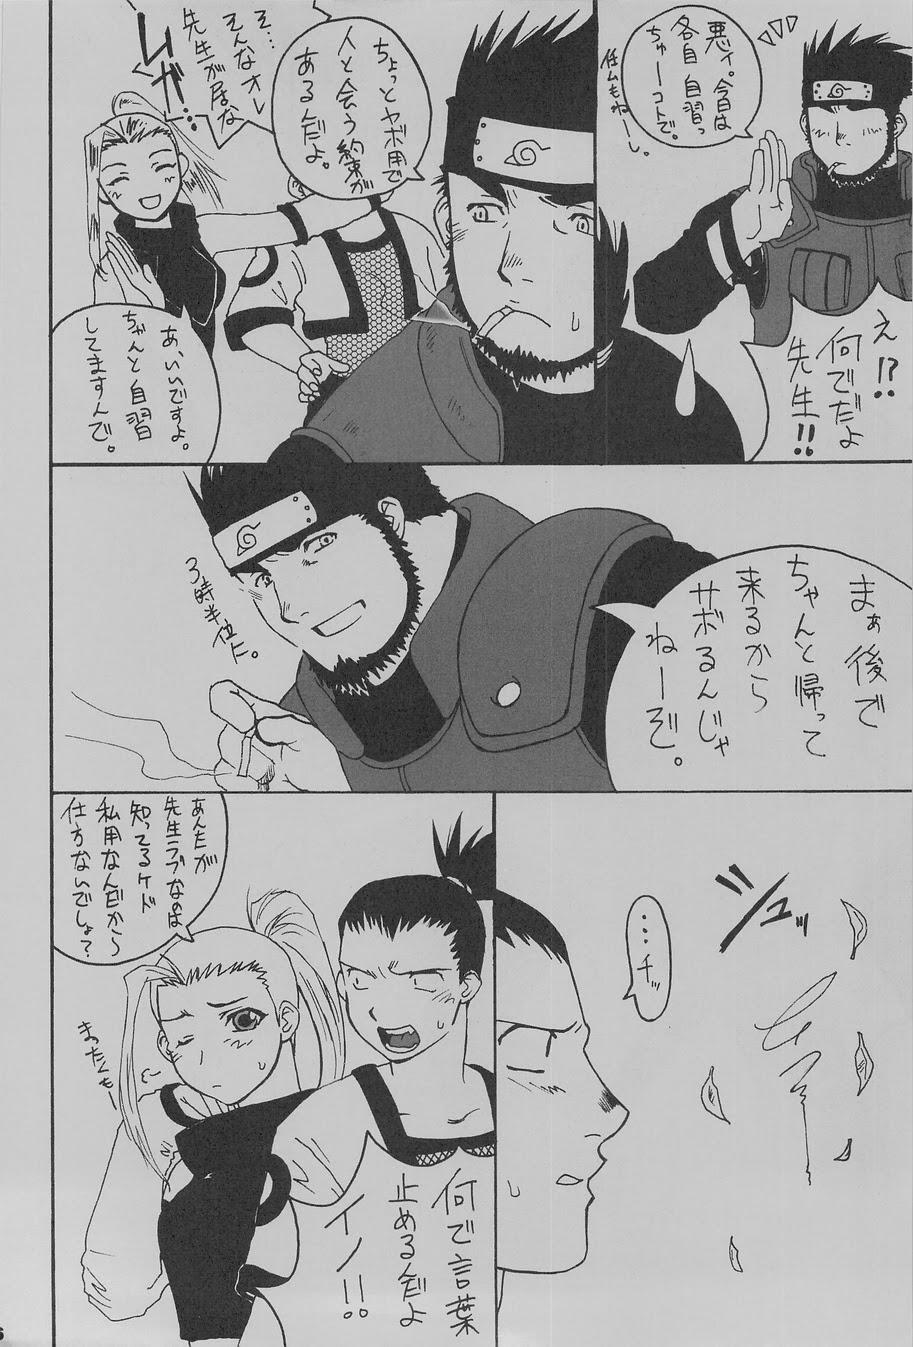 Safado Ka - it happened in the distant past - Naruto Fullmetal alchemist Gunparade march Domination - Page 8